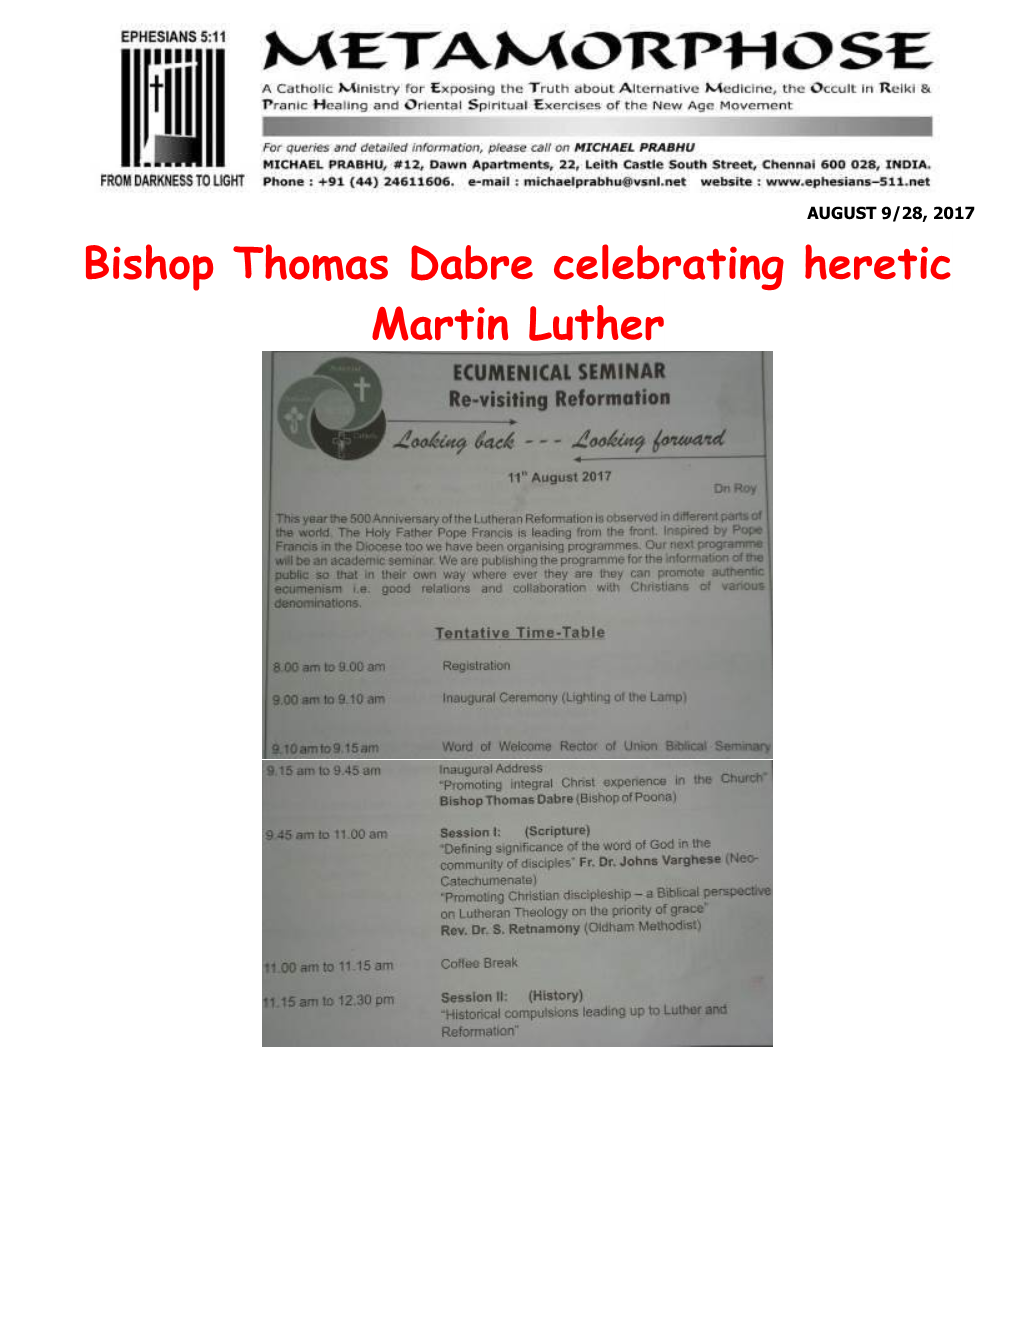 Bishop Thomas Dabre Celebrating Heretic Martin Luther